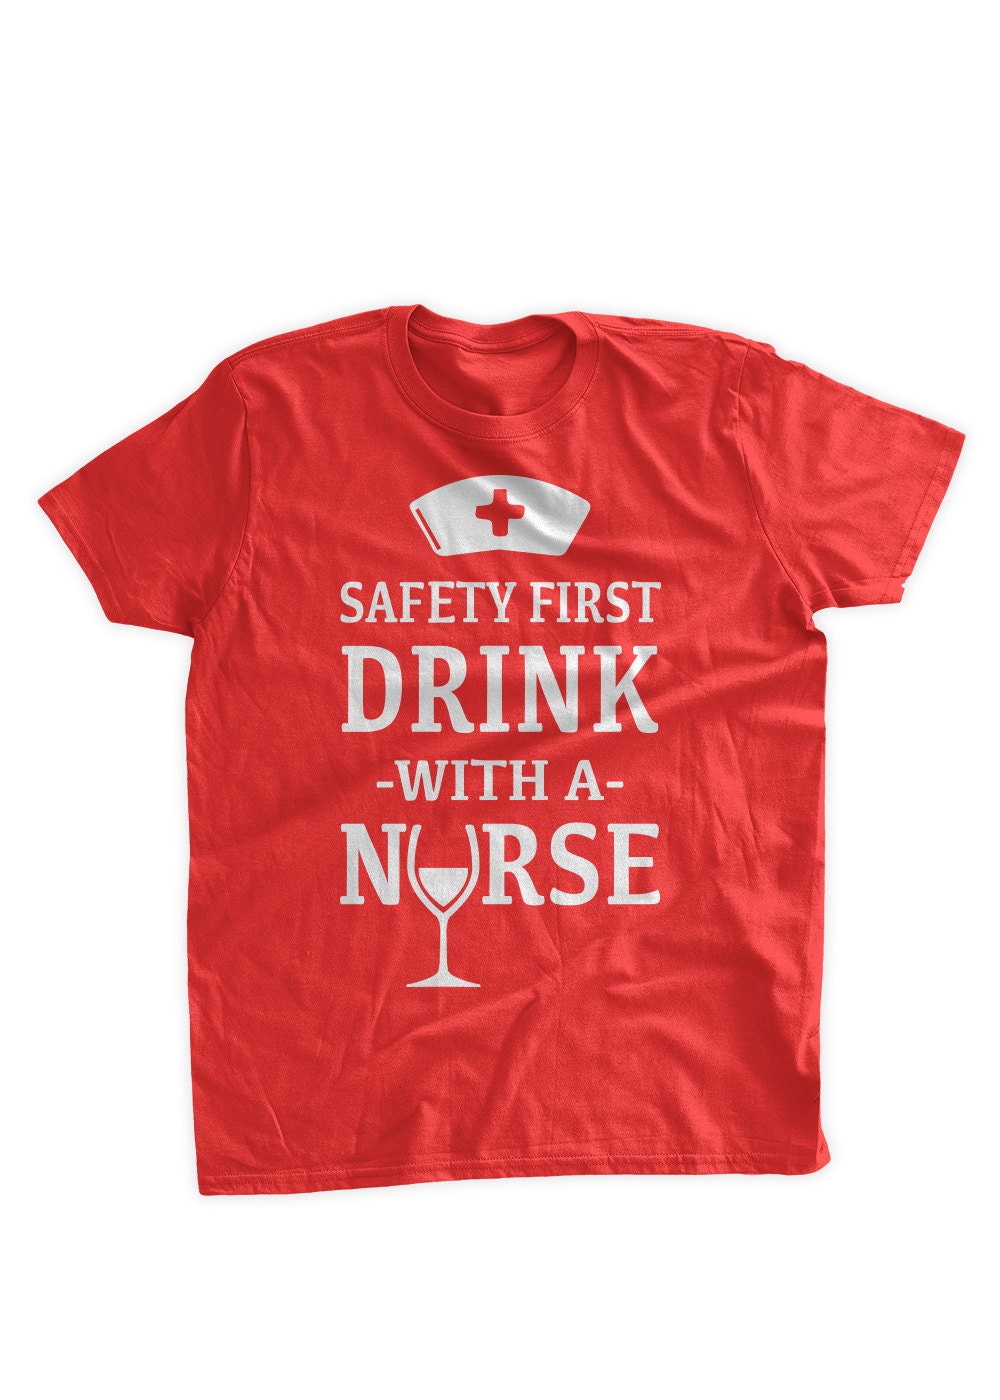 Safety First Drink With A Nurse TShirt Nursing Nurse RPN RN